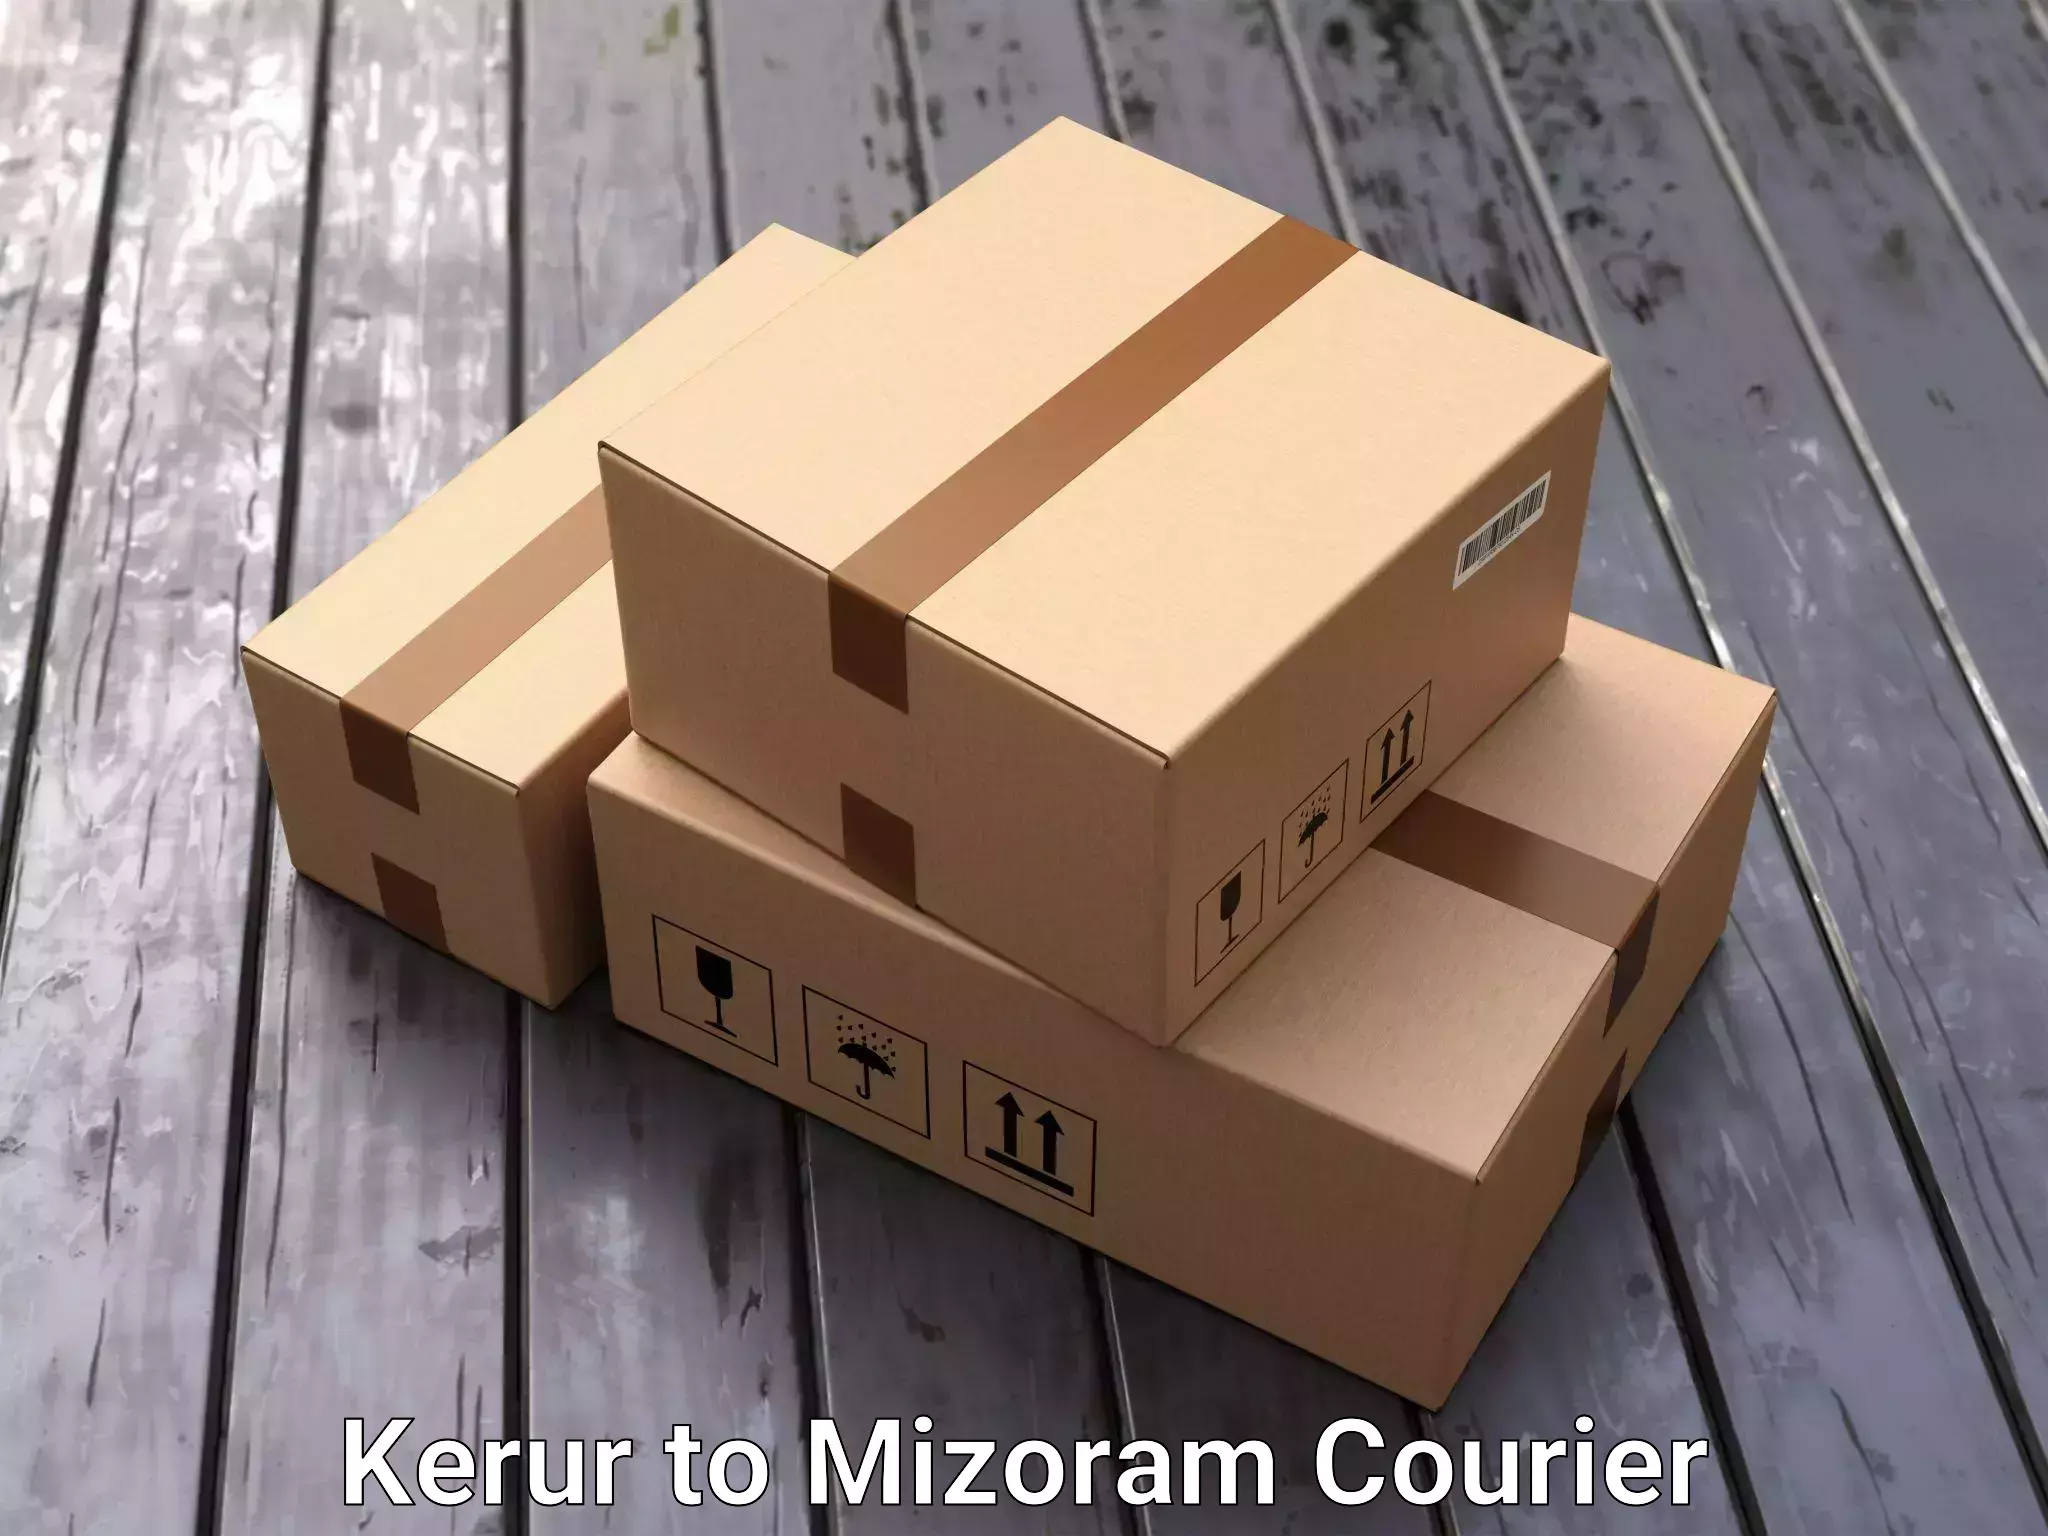 Professional home movers Kerur to Mizoram